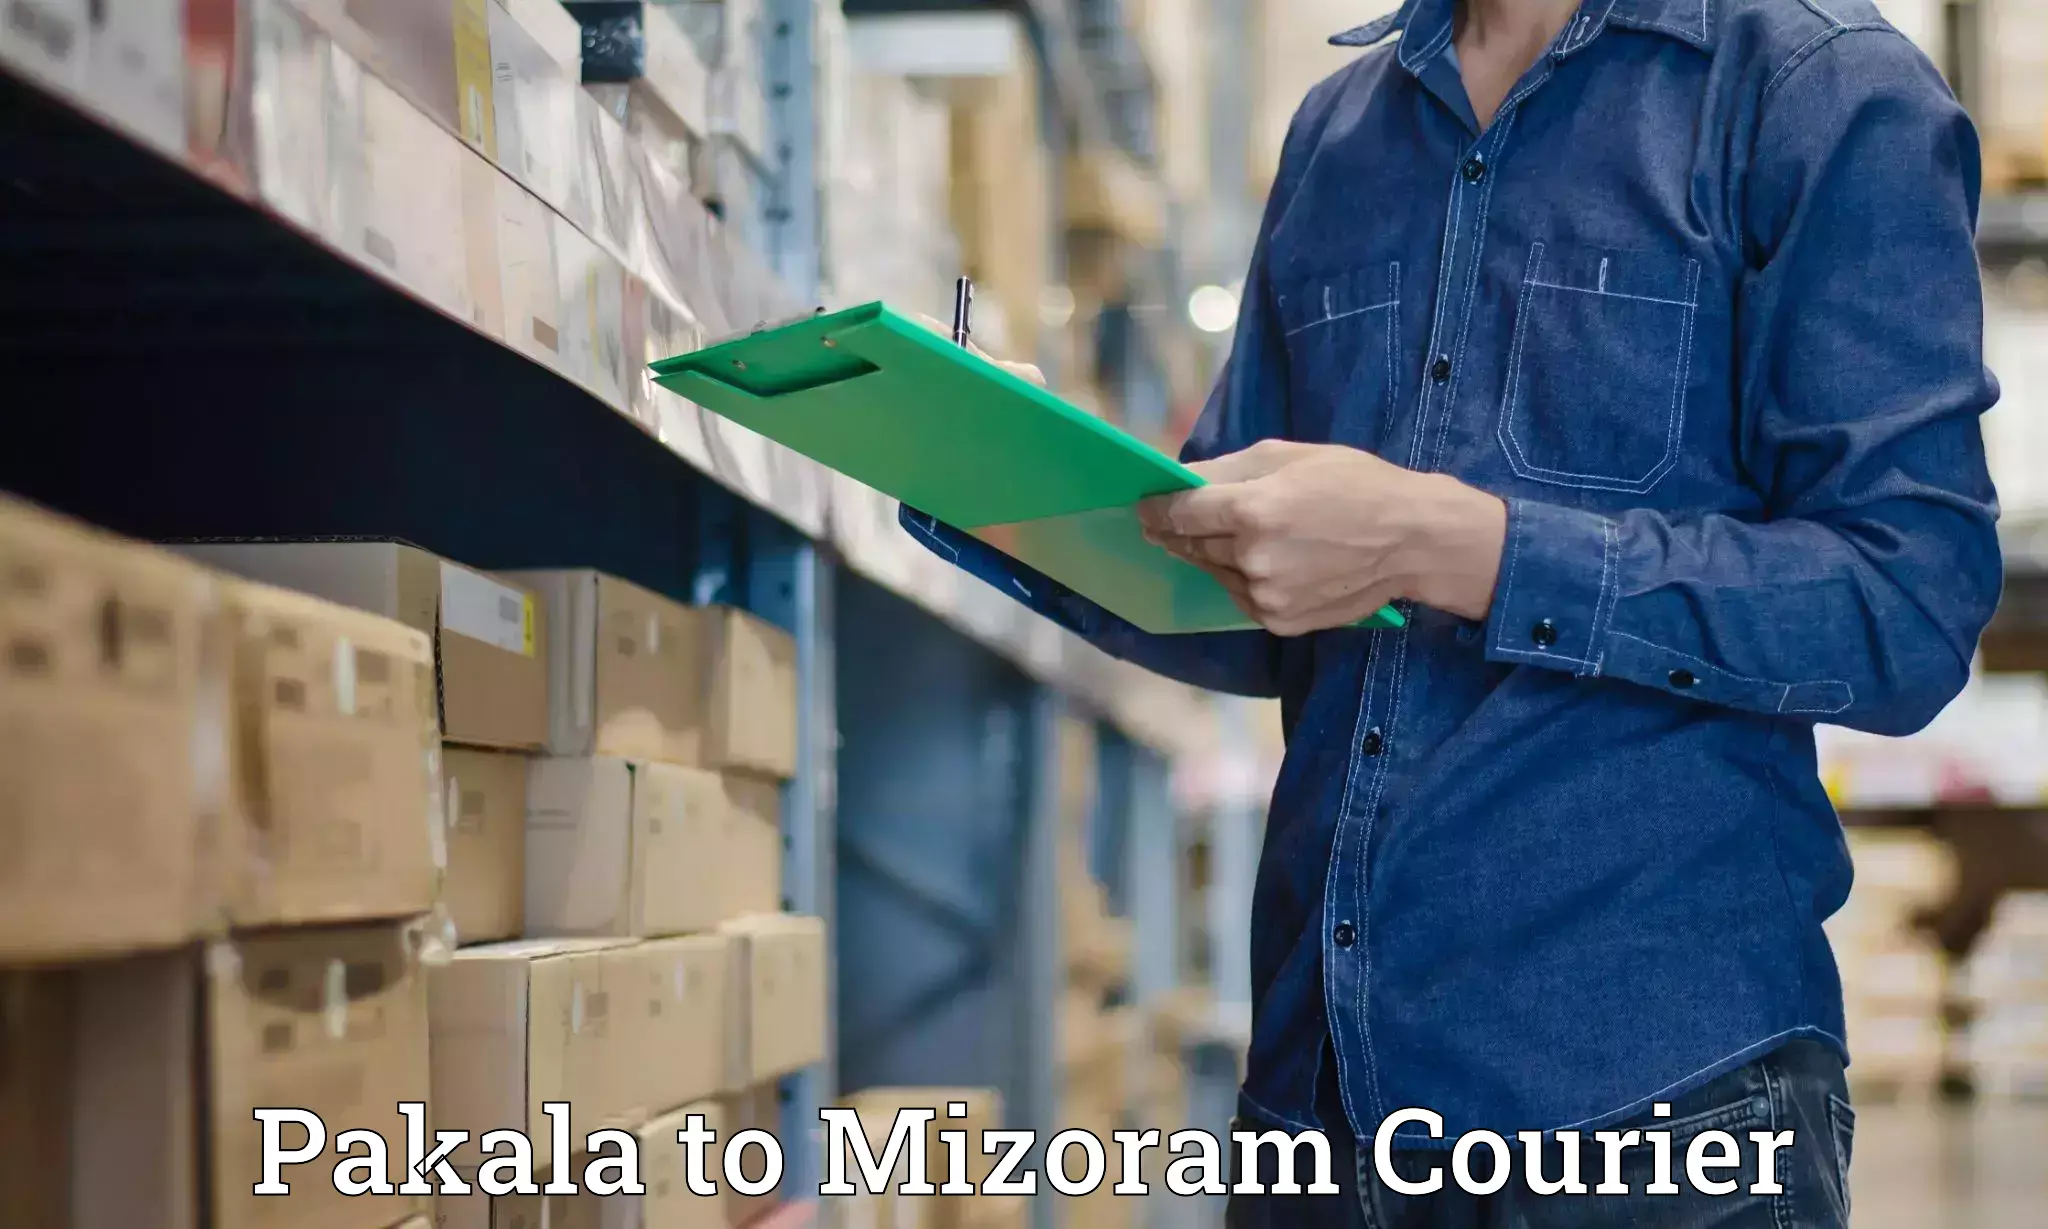 Efficient order fulfillment in Pakala to Mizoram